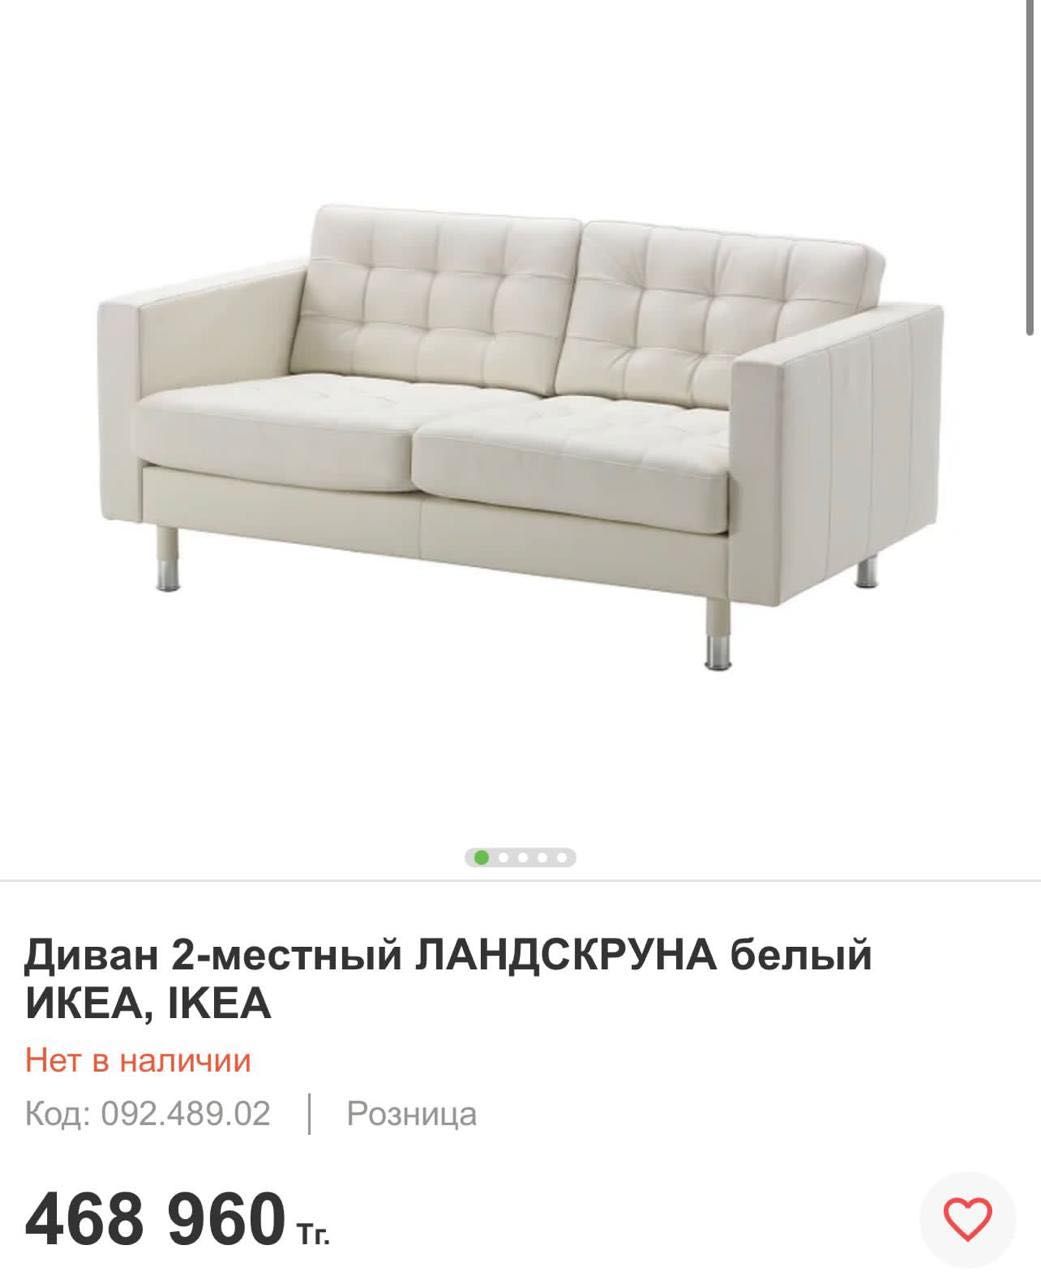 Диван Ikea  Ландскруна серый